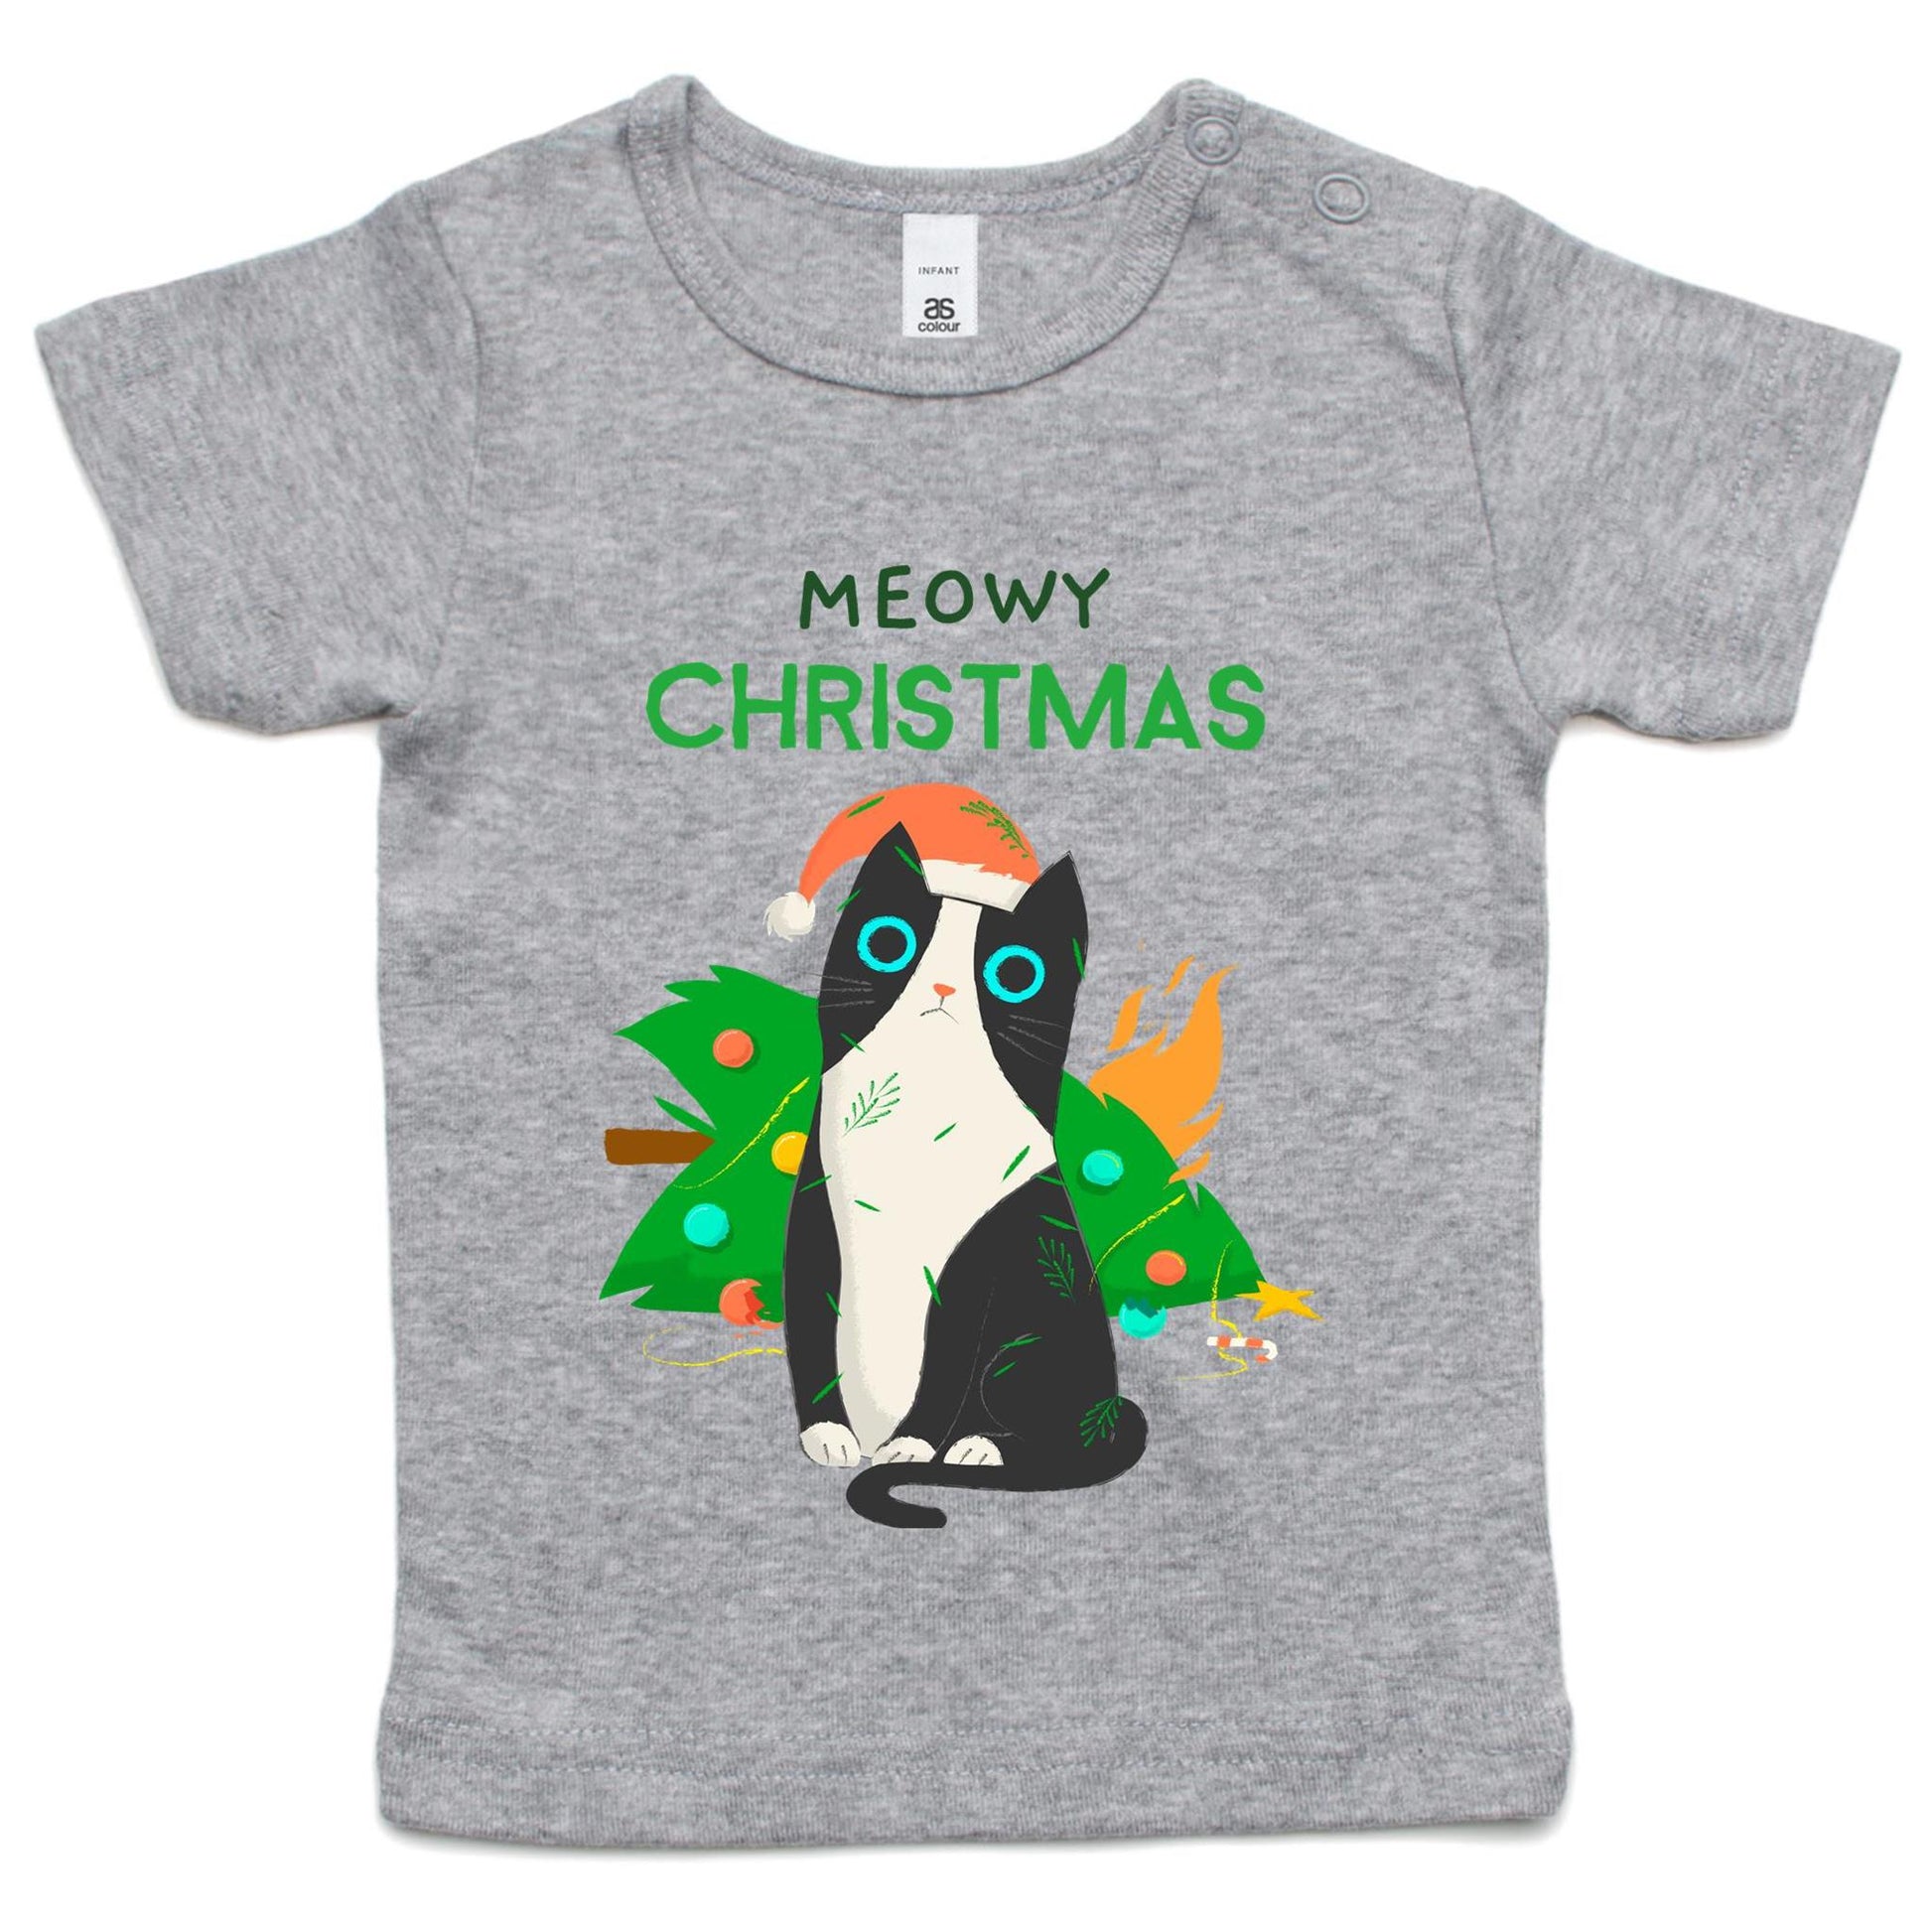 Meowy Christmas - Baby T-shirt Grey Marle Christmas Baby T-shirt Merry Christmas